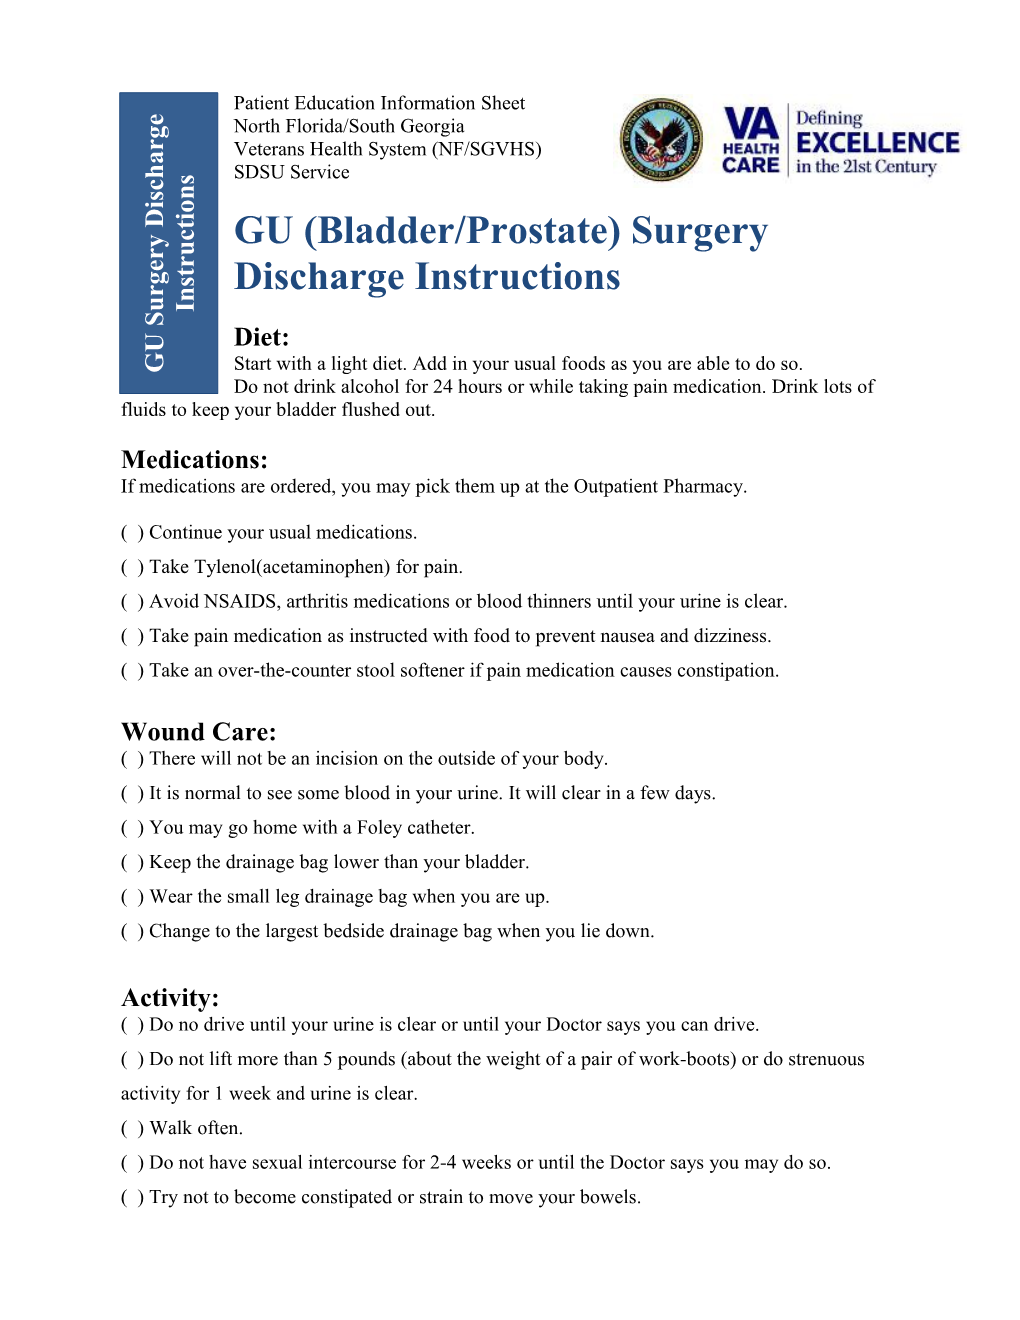 GU (Bladder/Prostate) Surgery Discharge Instructions